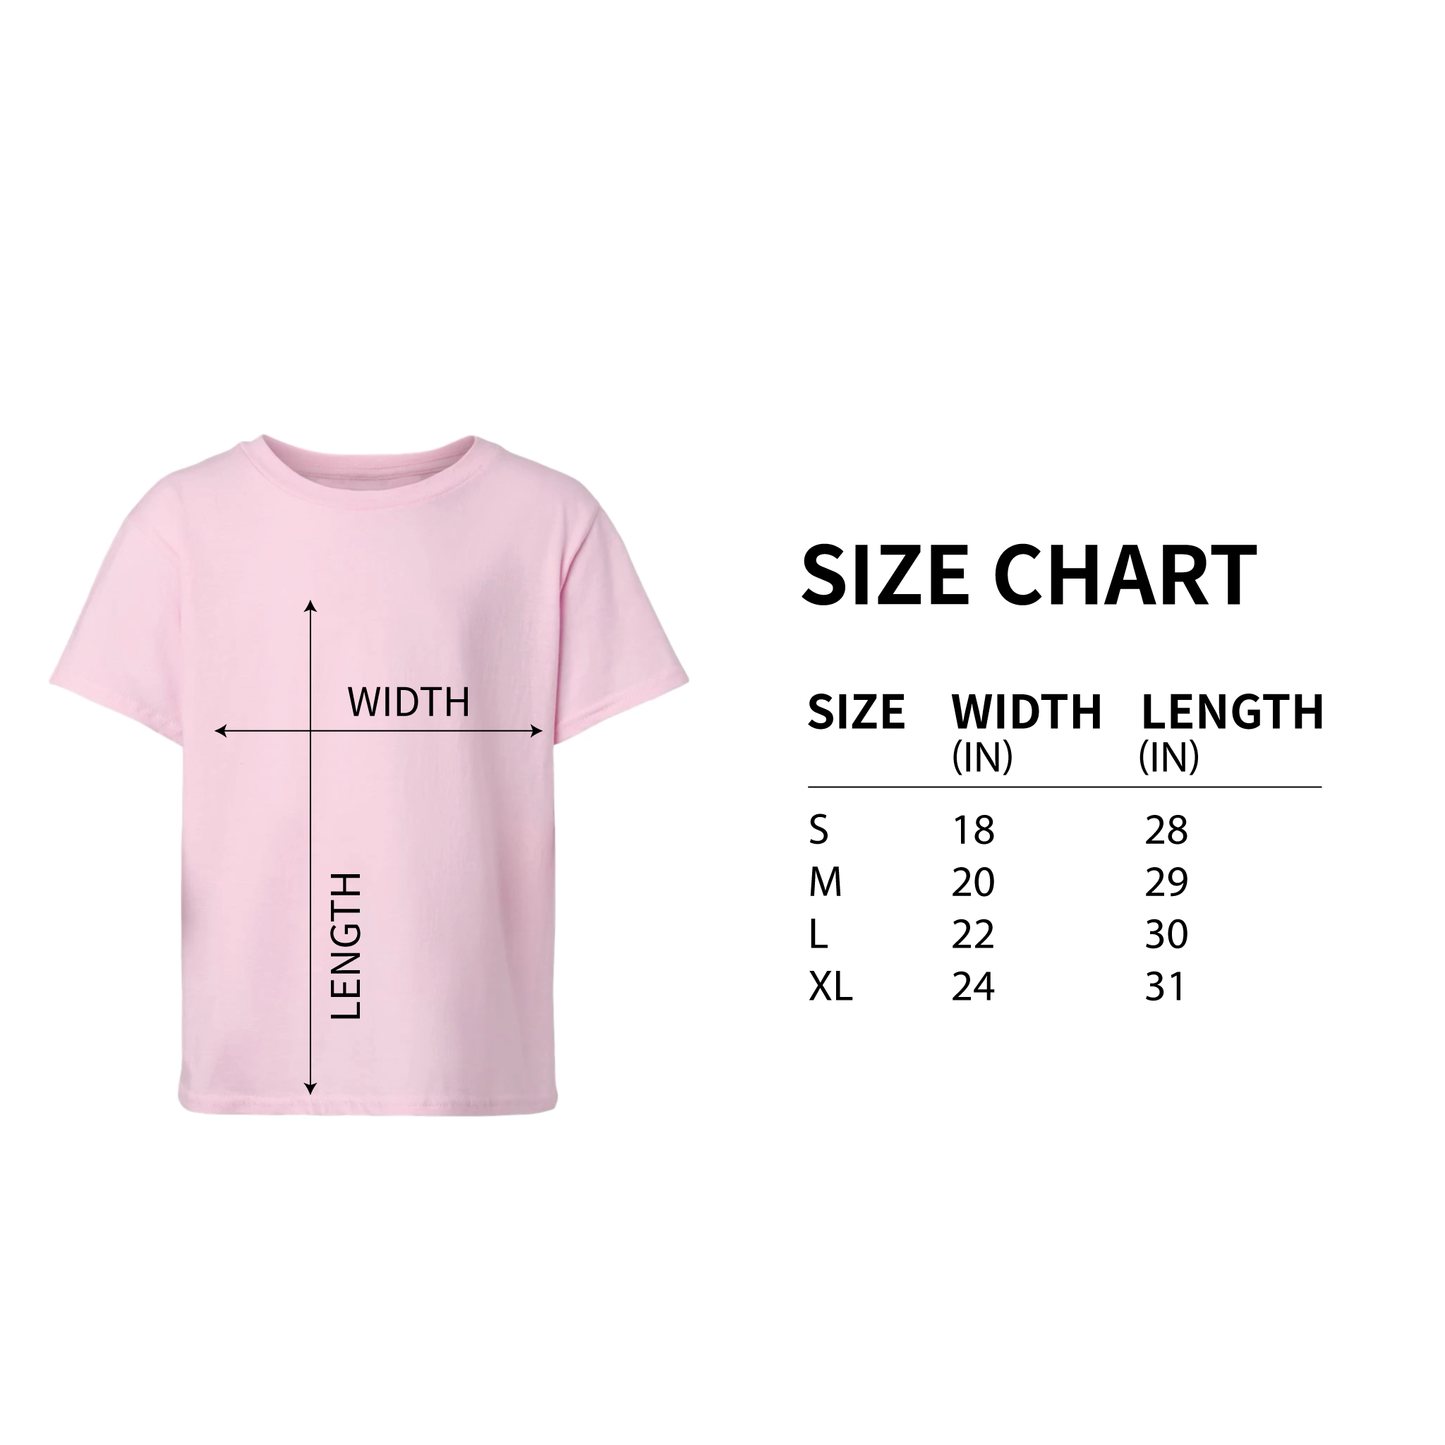 Pink "I dabble" T-Shirt